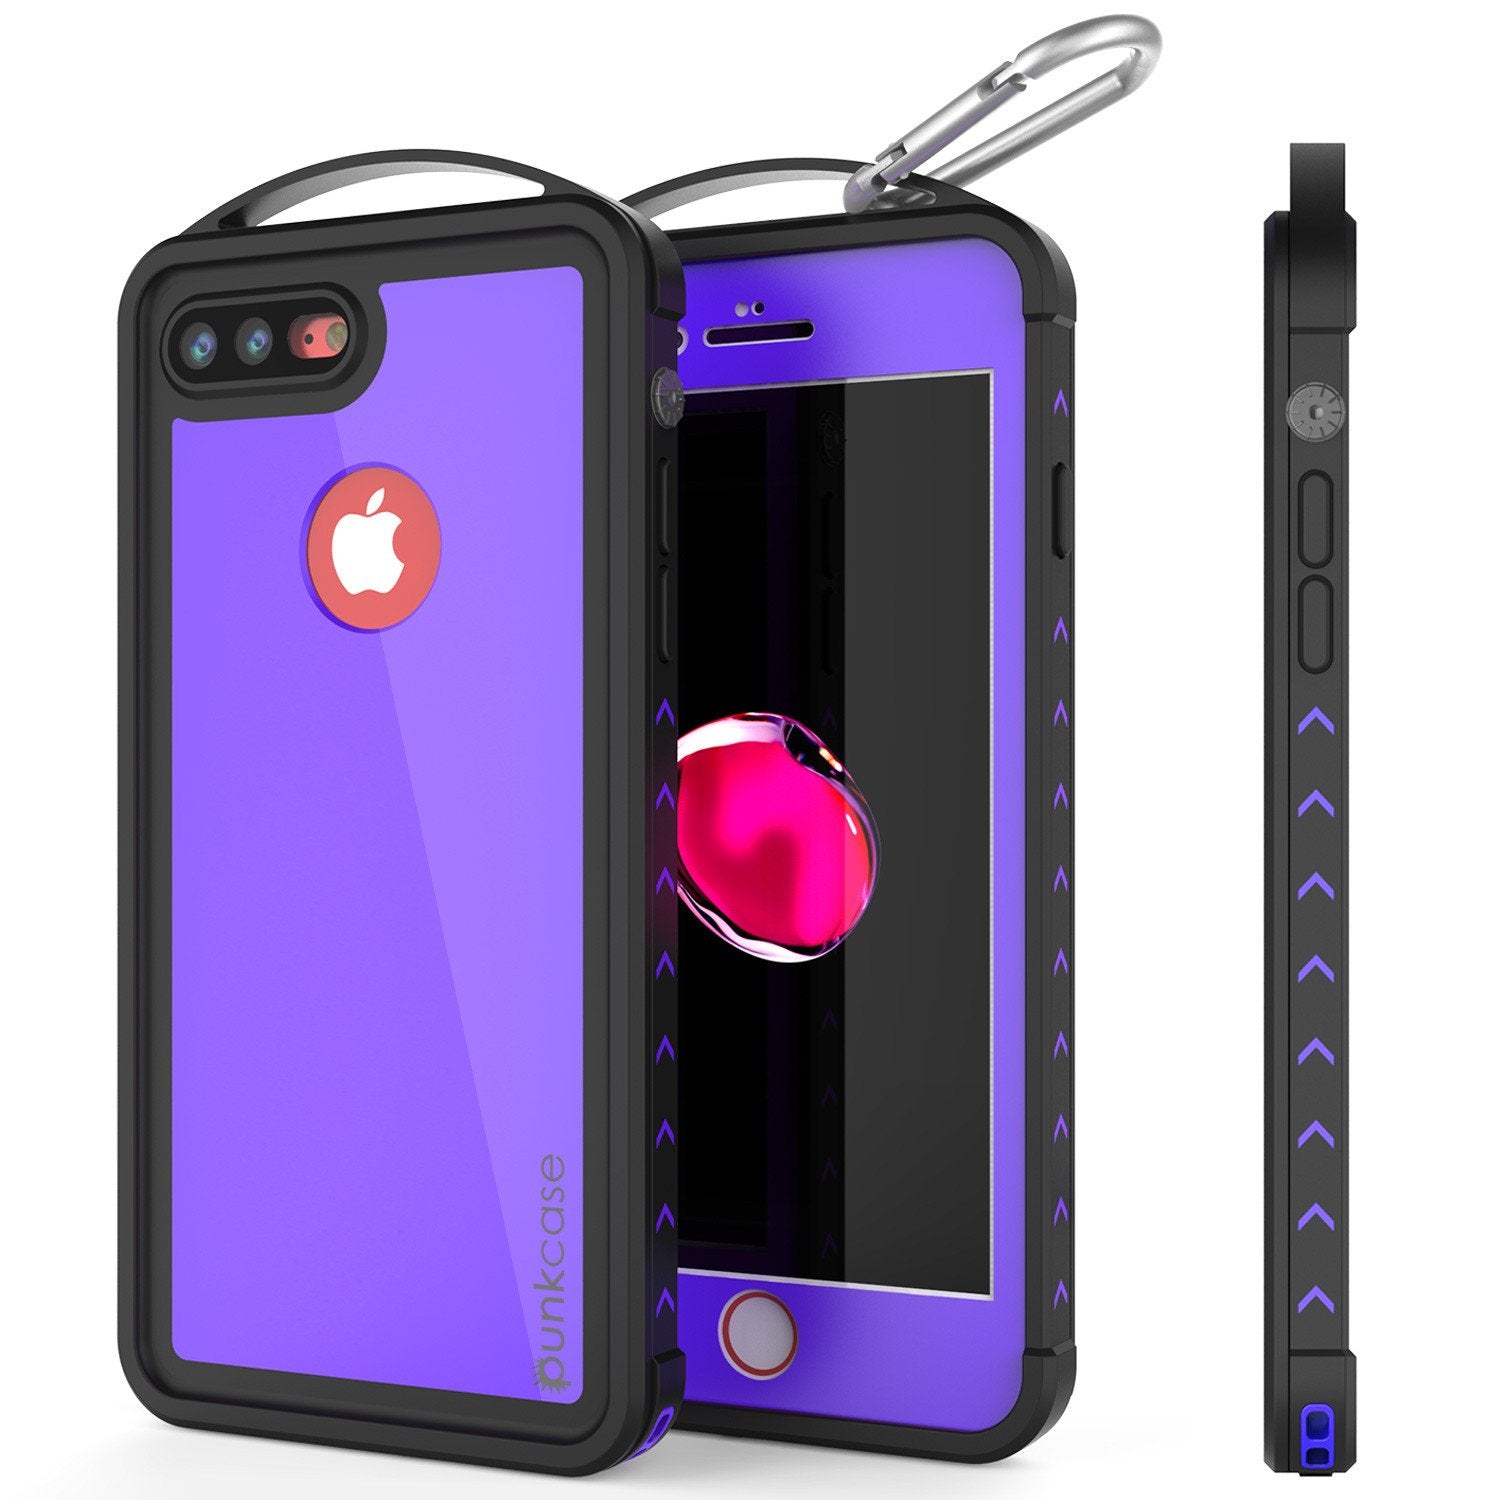 iPhone 7+ Plus Waterproof Case, Punkcase ALPINE Series, Purple | Heavy Duty Armor Cover